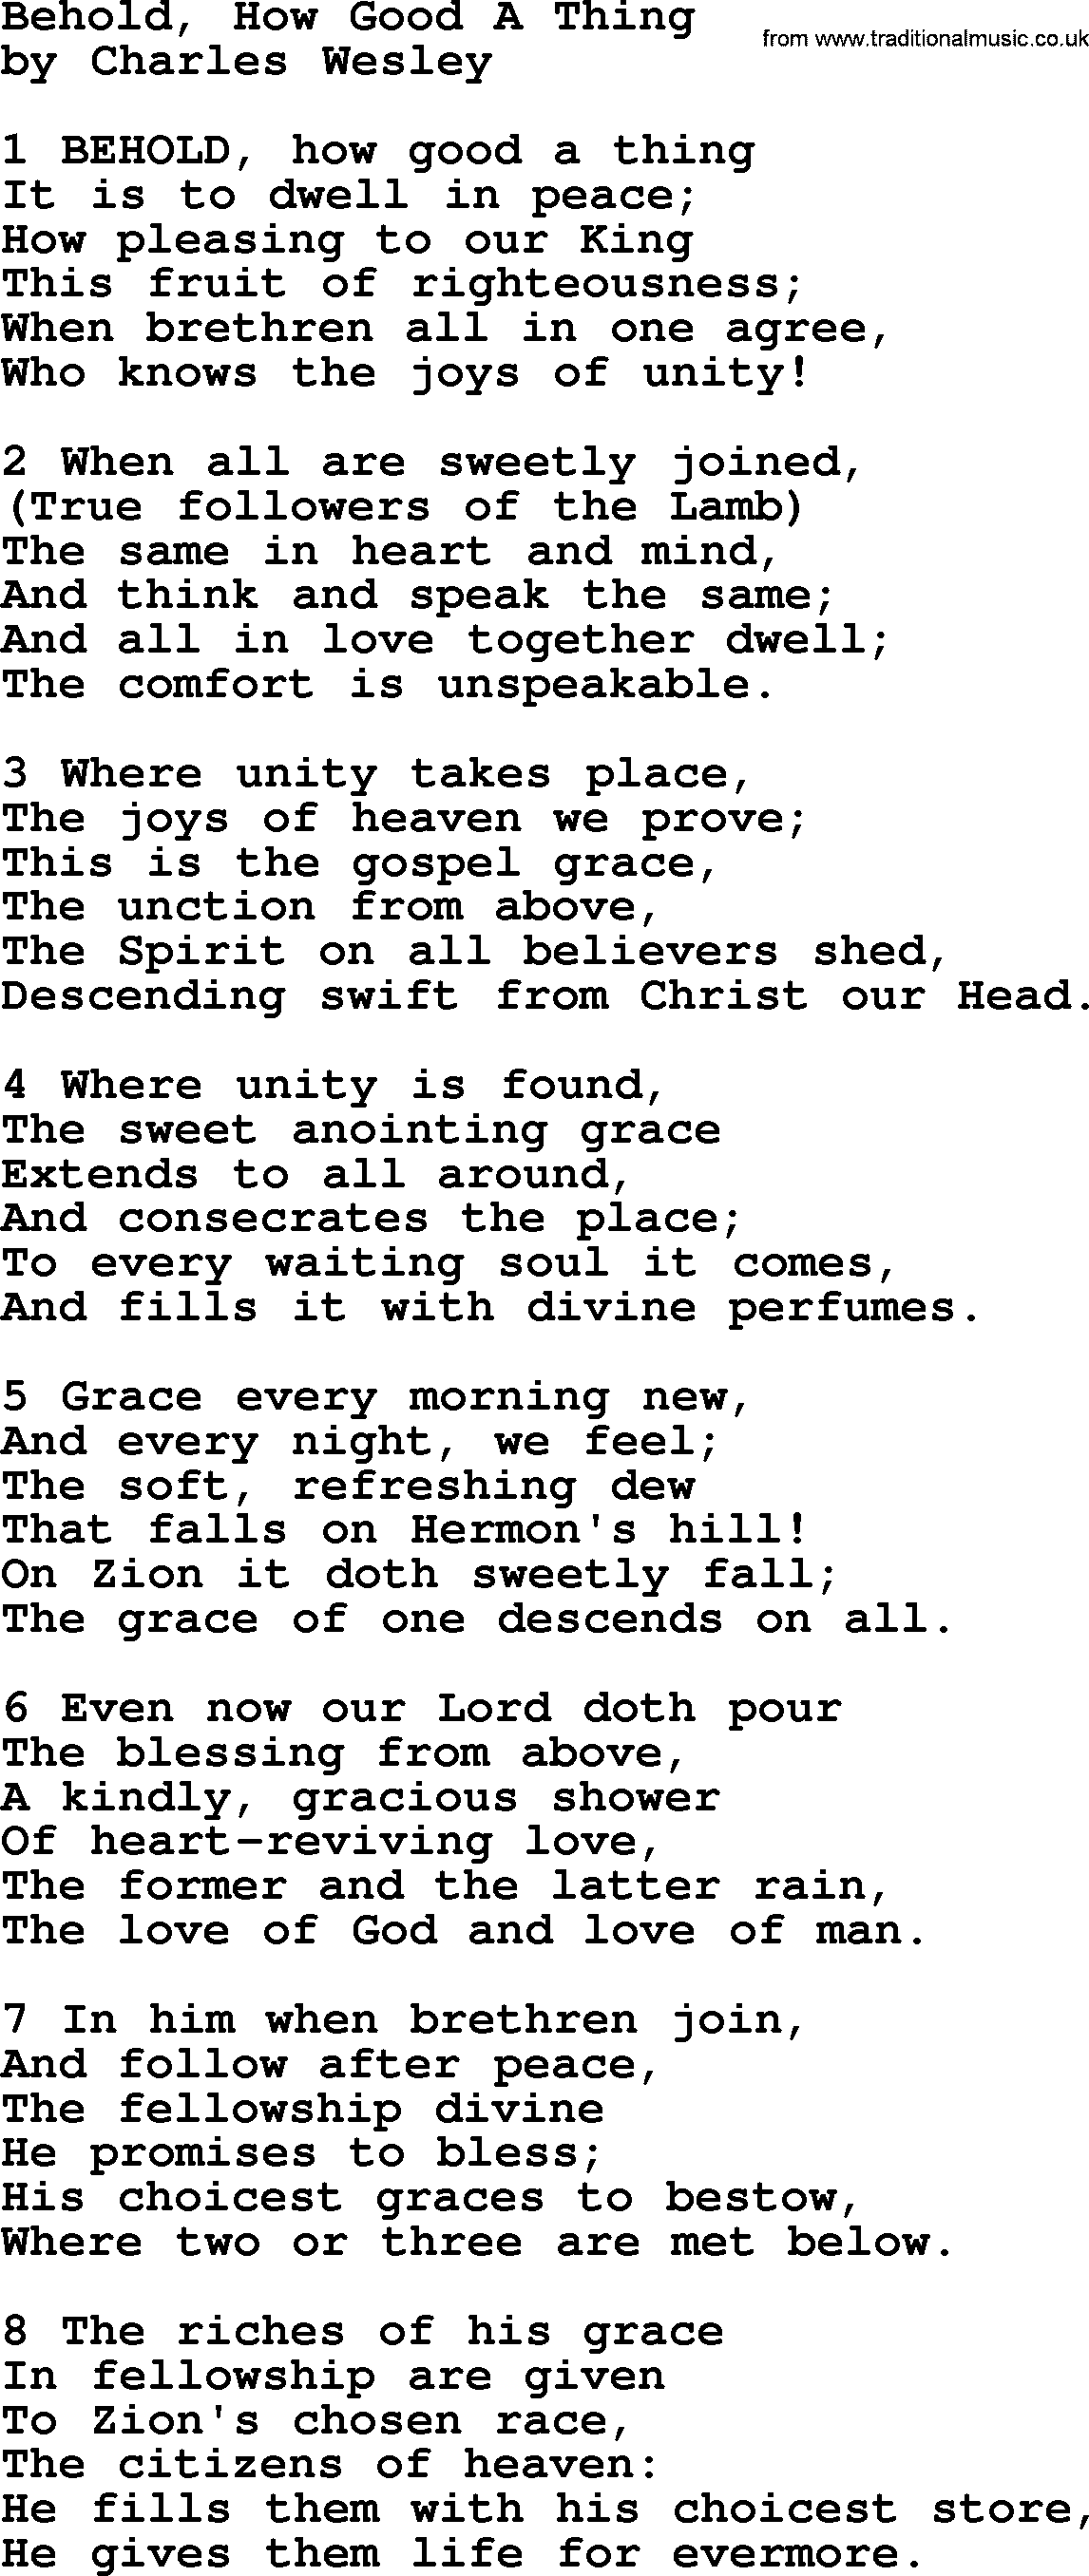 Charles Wesley hymn: Behold, How Good A Thing, lyrics